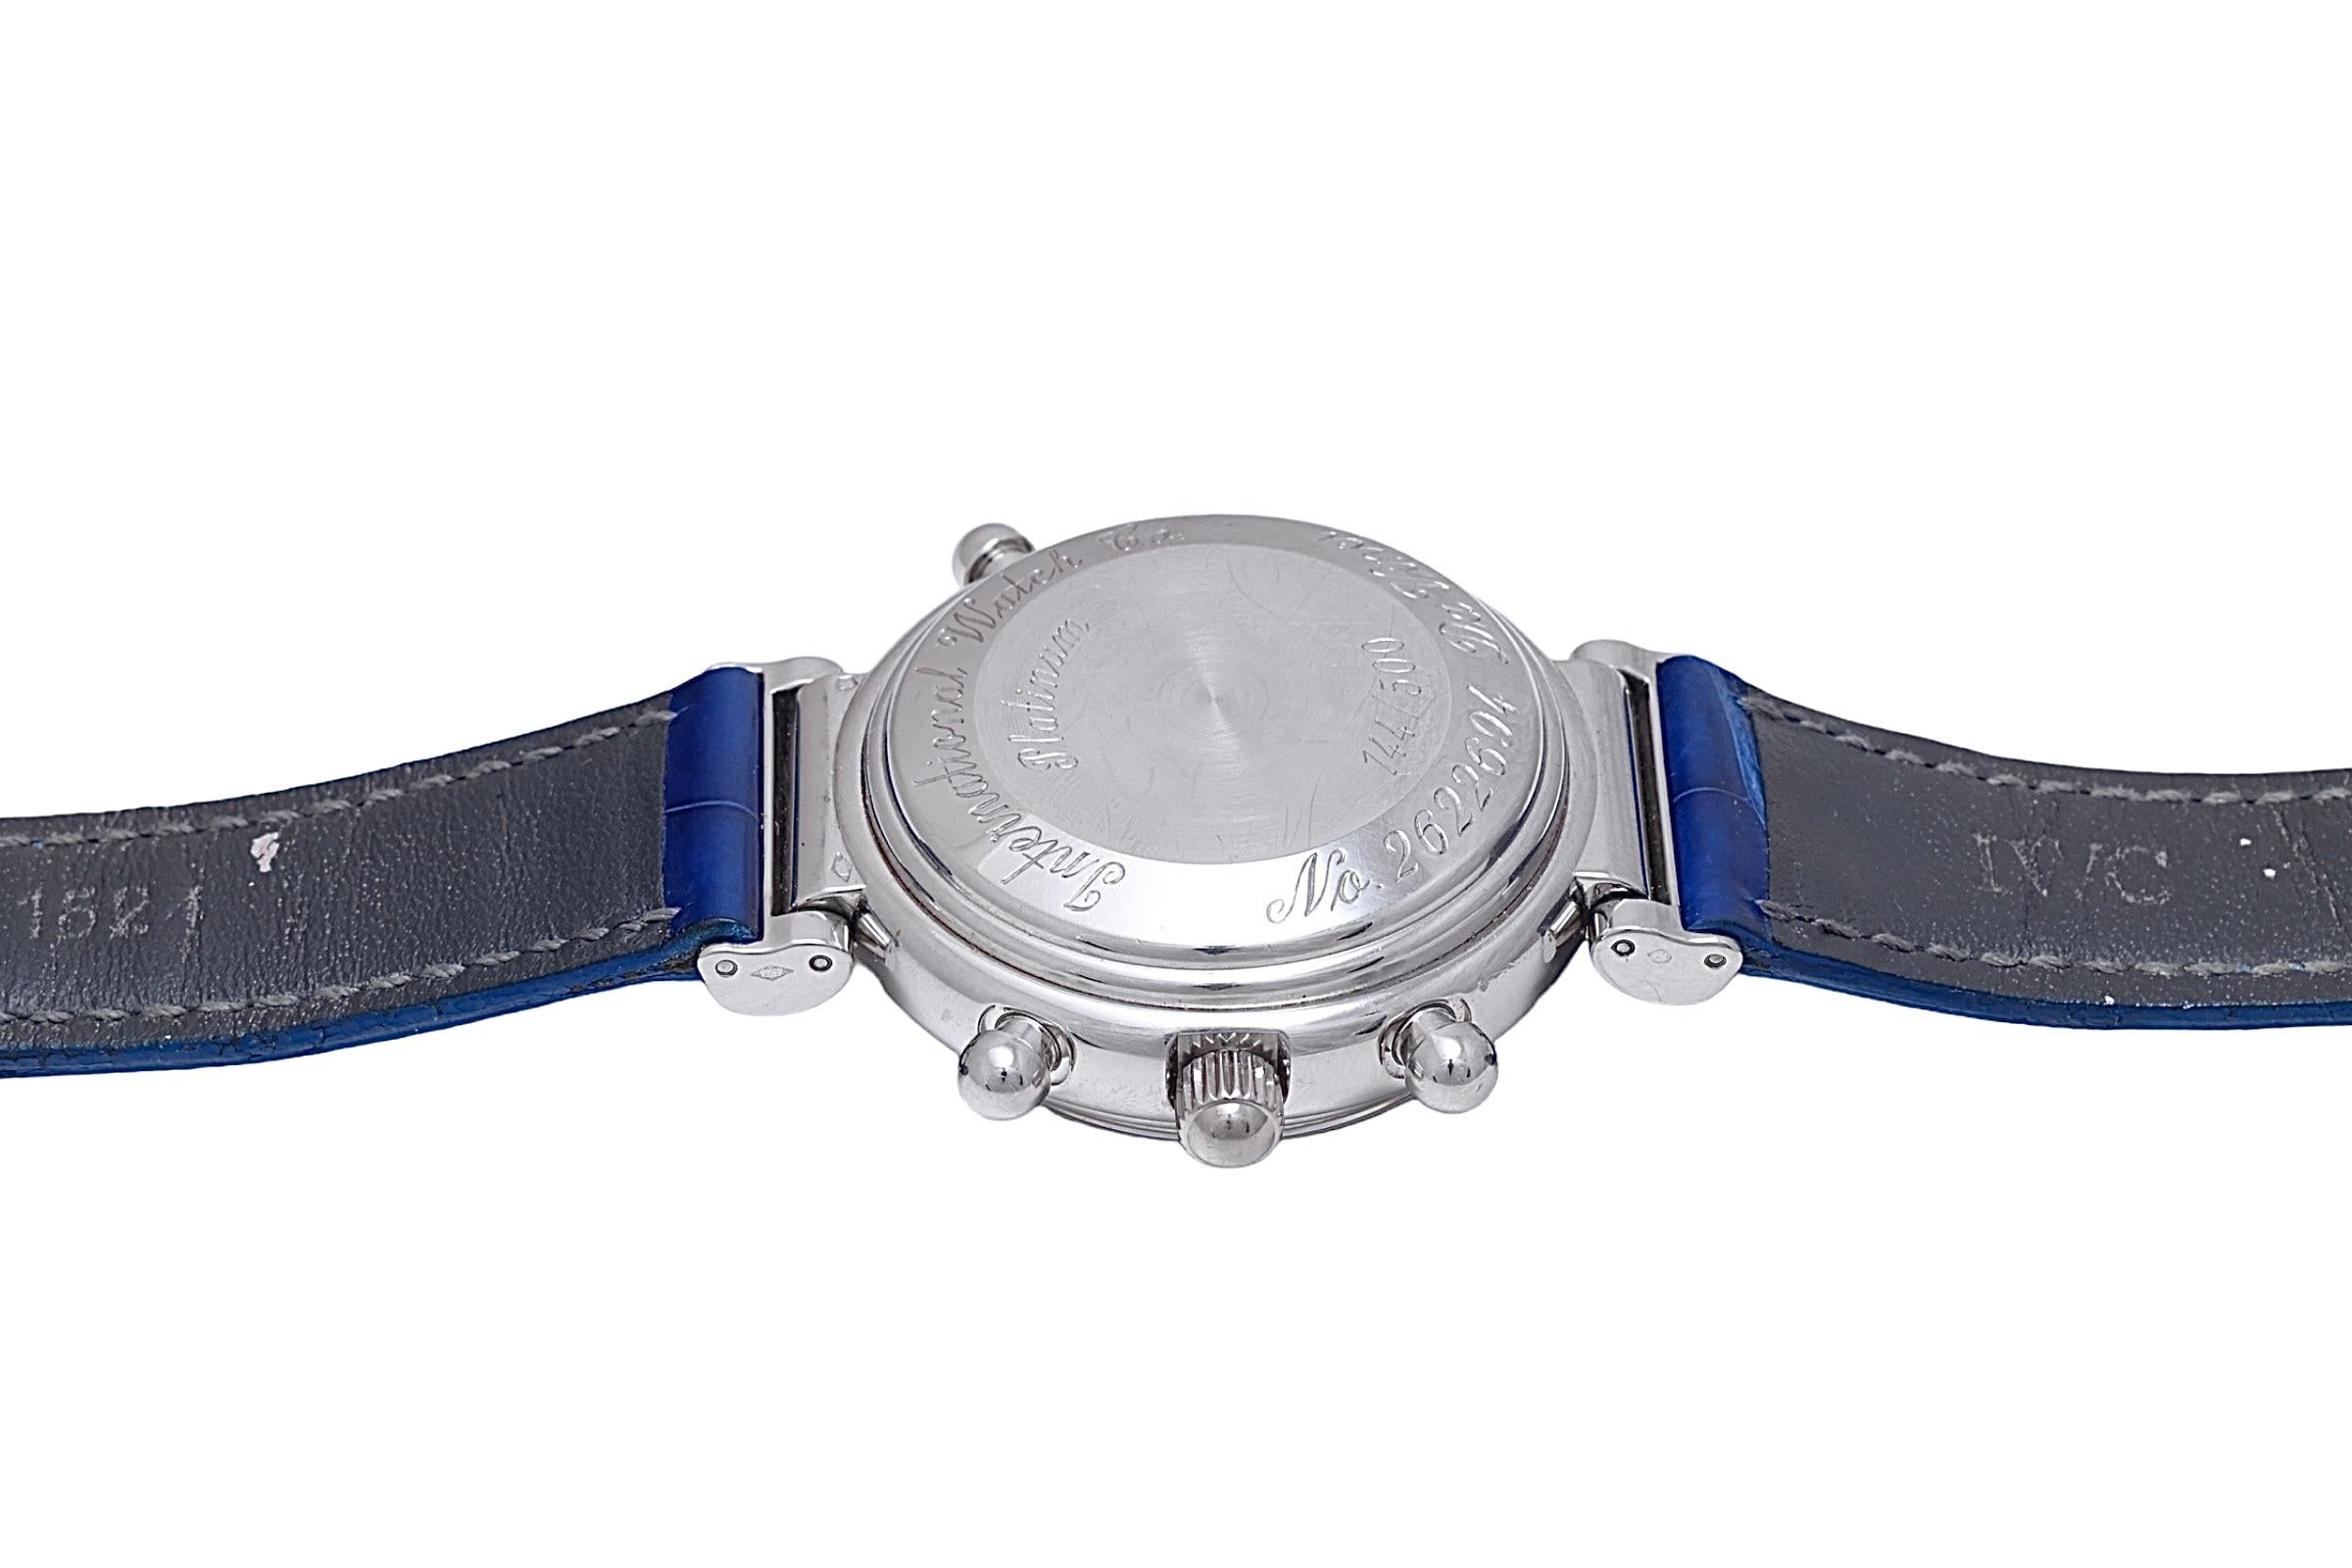 Platinum IWC Perpetual Calendar Split Second Chronograph Limited Wrist Watch3751 For Sale 5